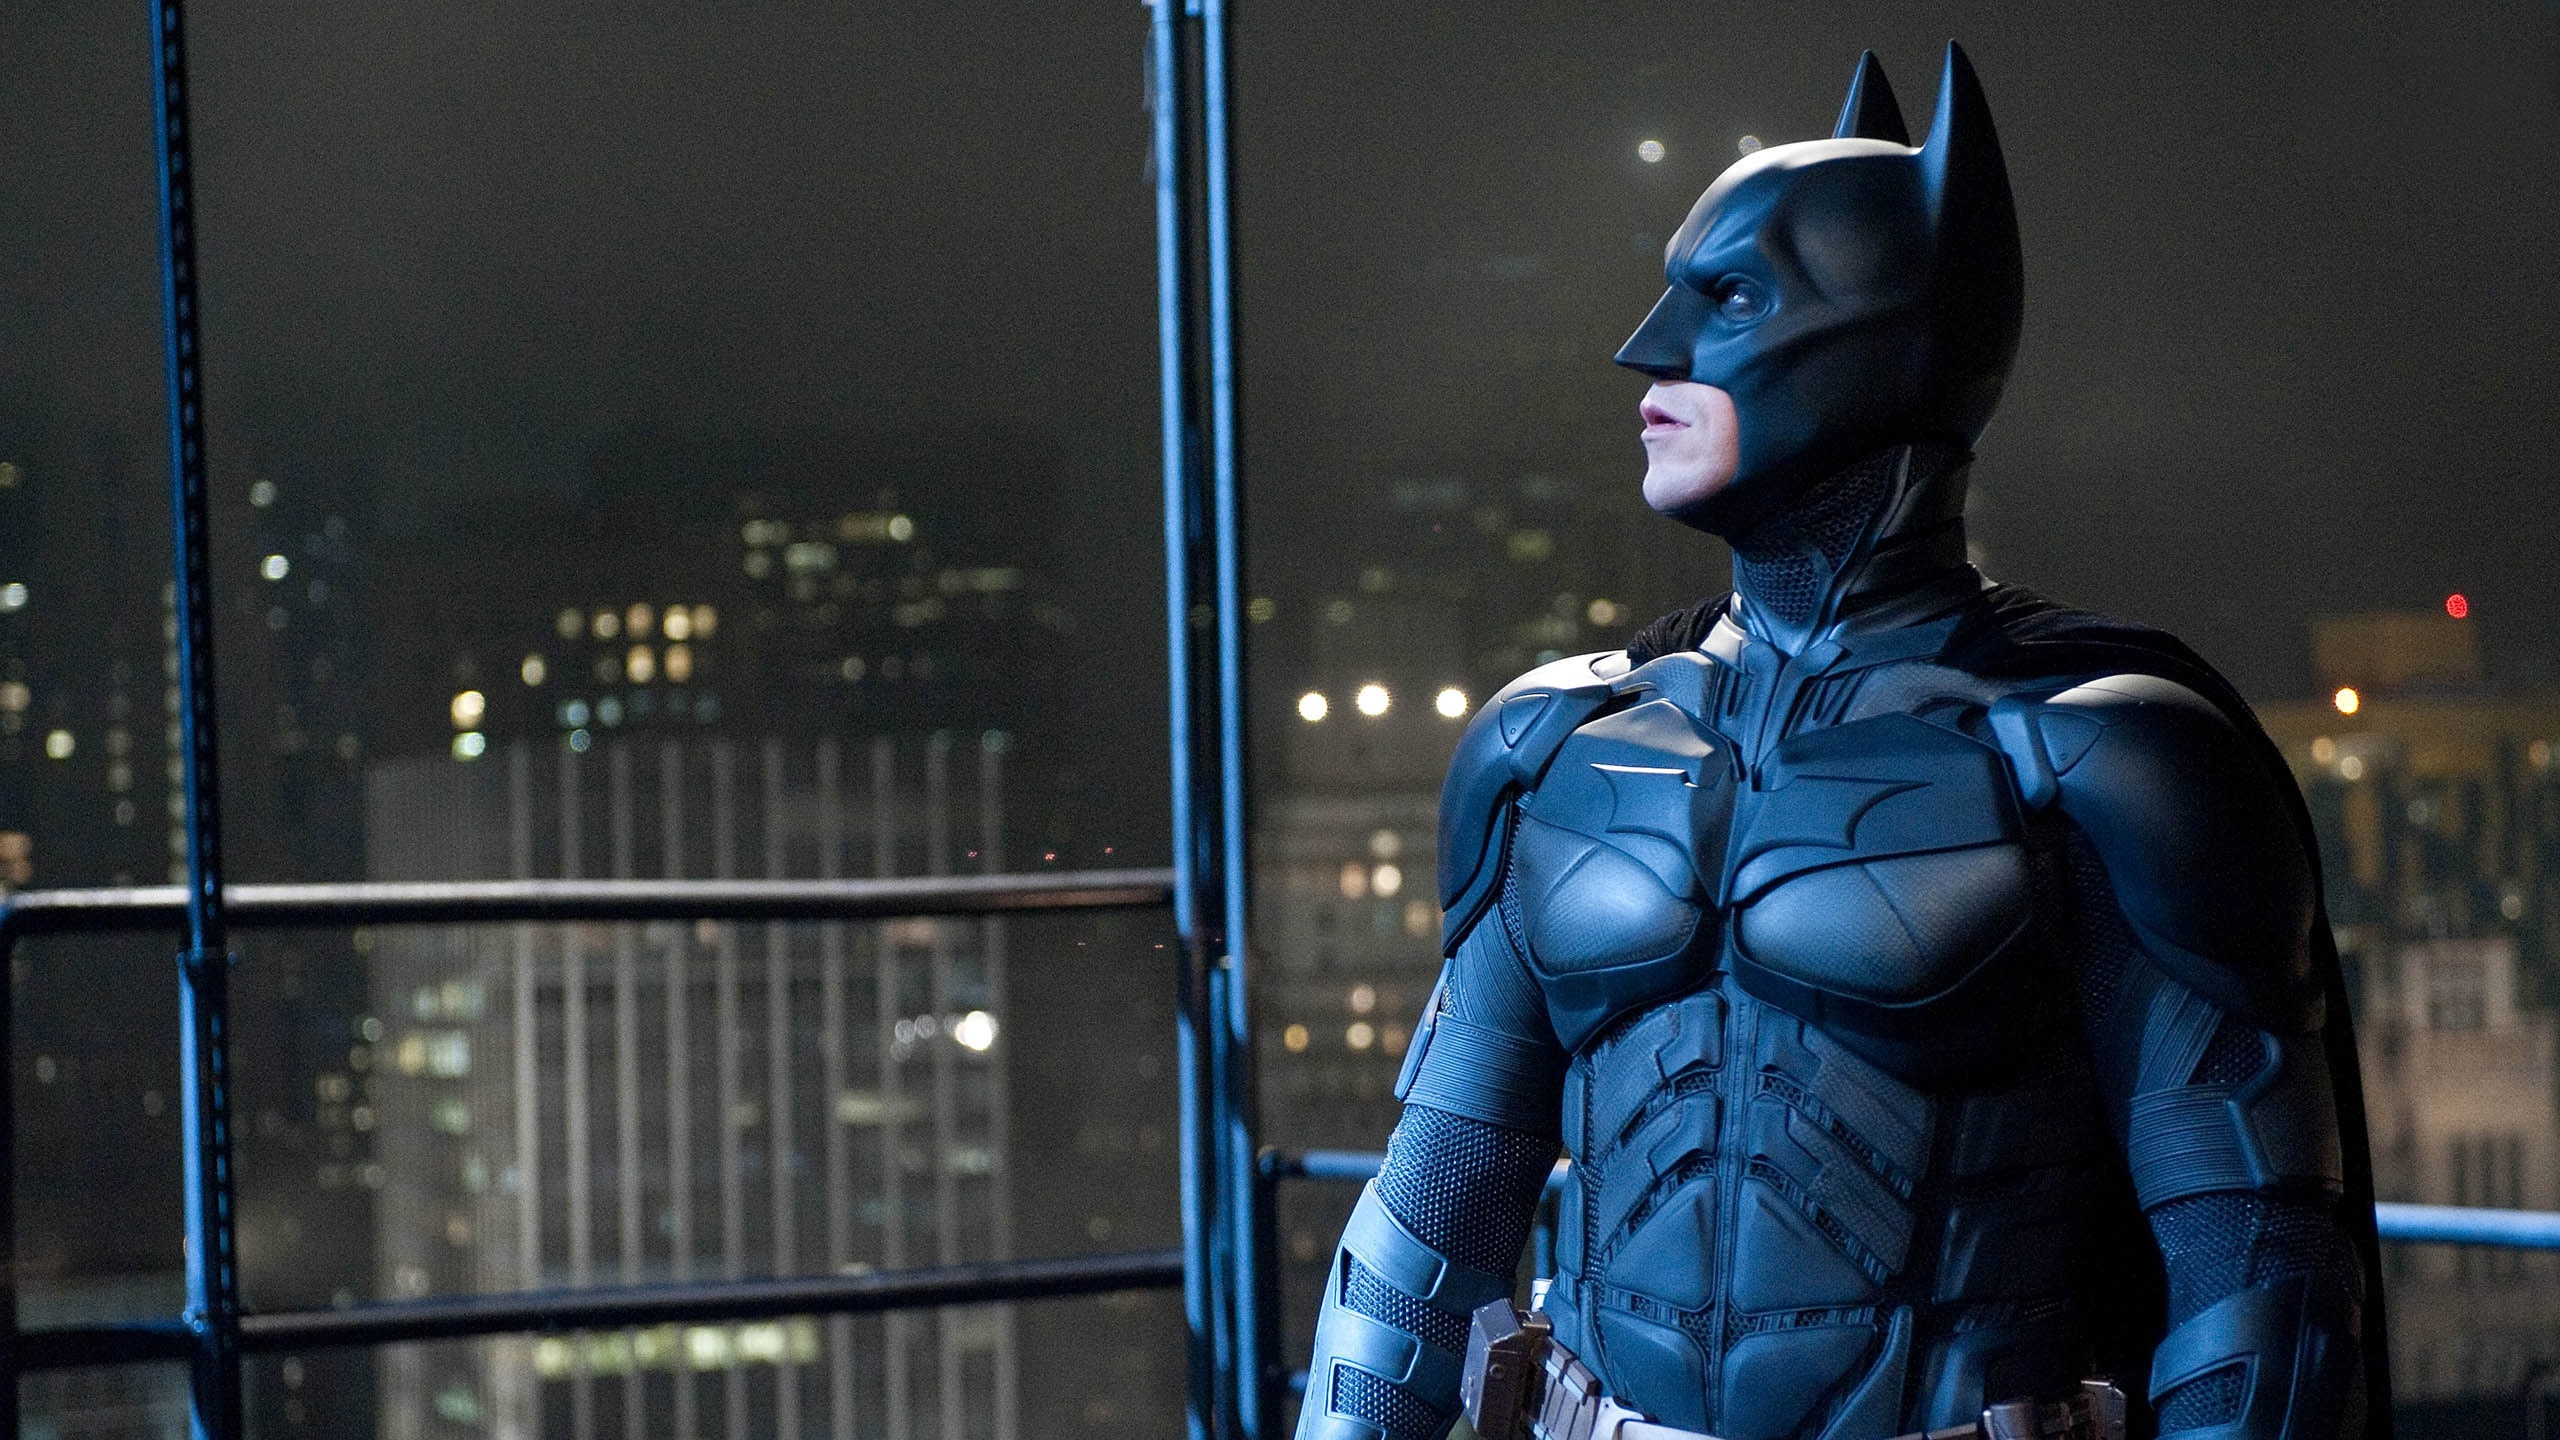 The Dark Knight Rises for 2560x1440 HDTV resolution